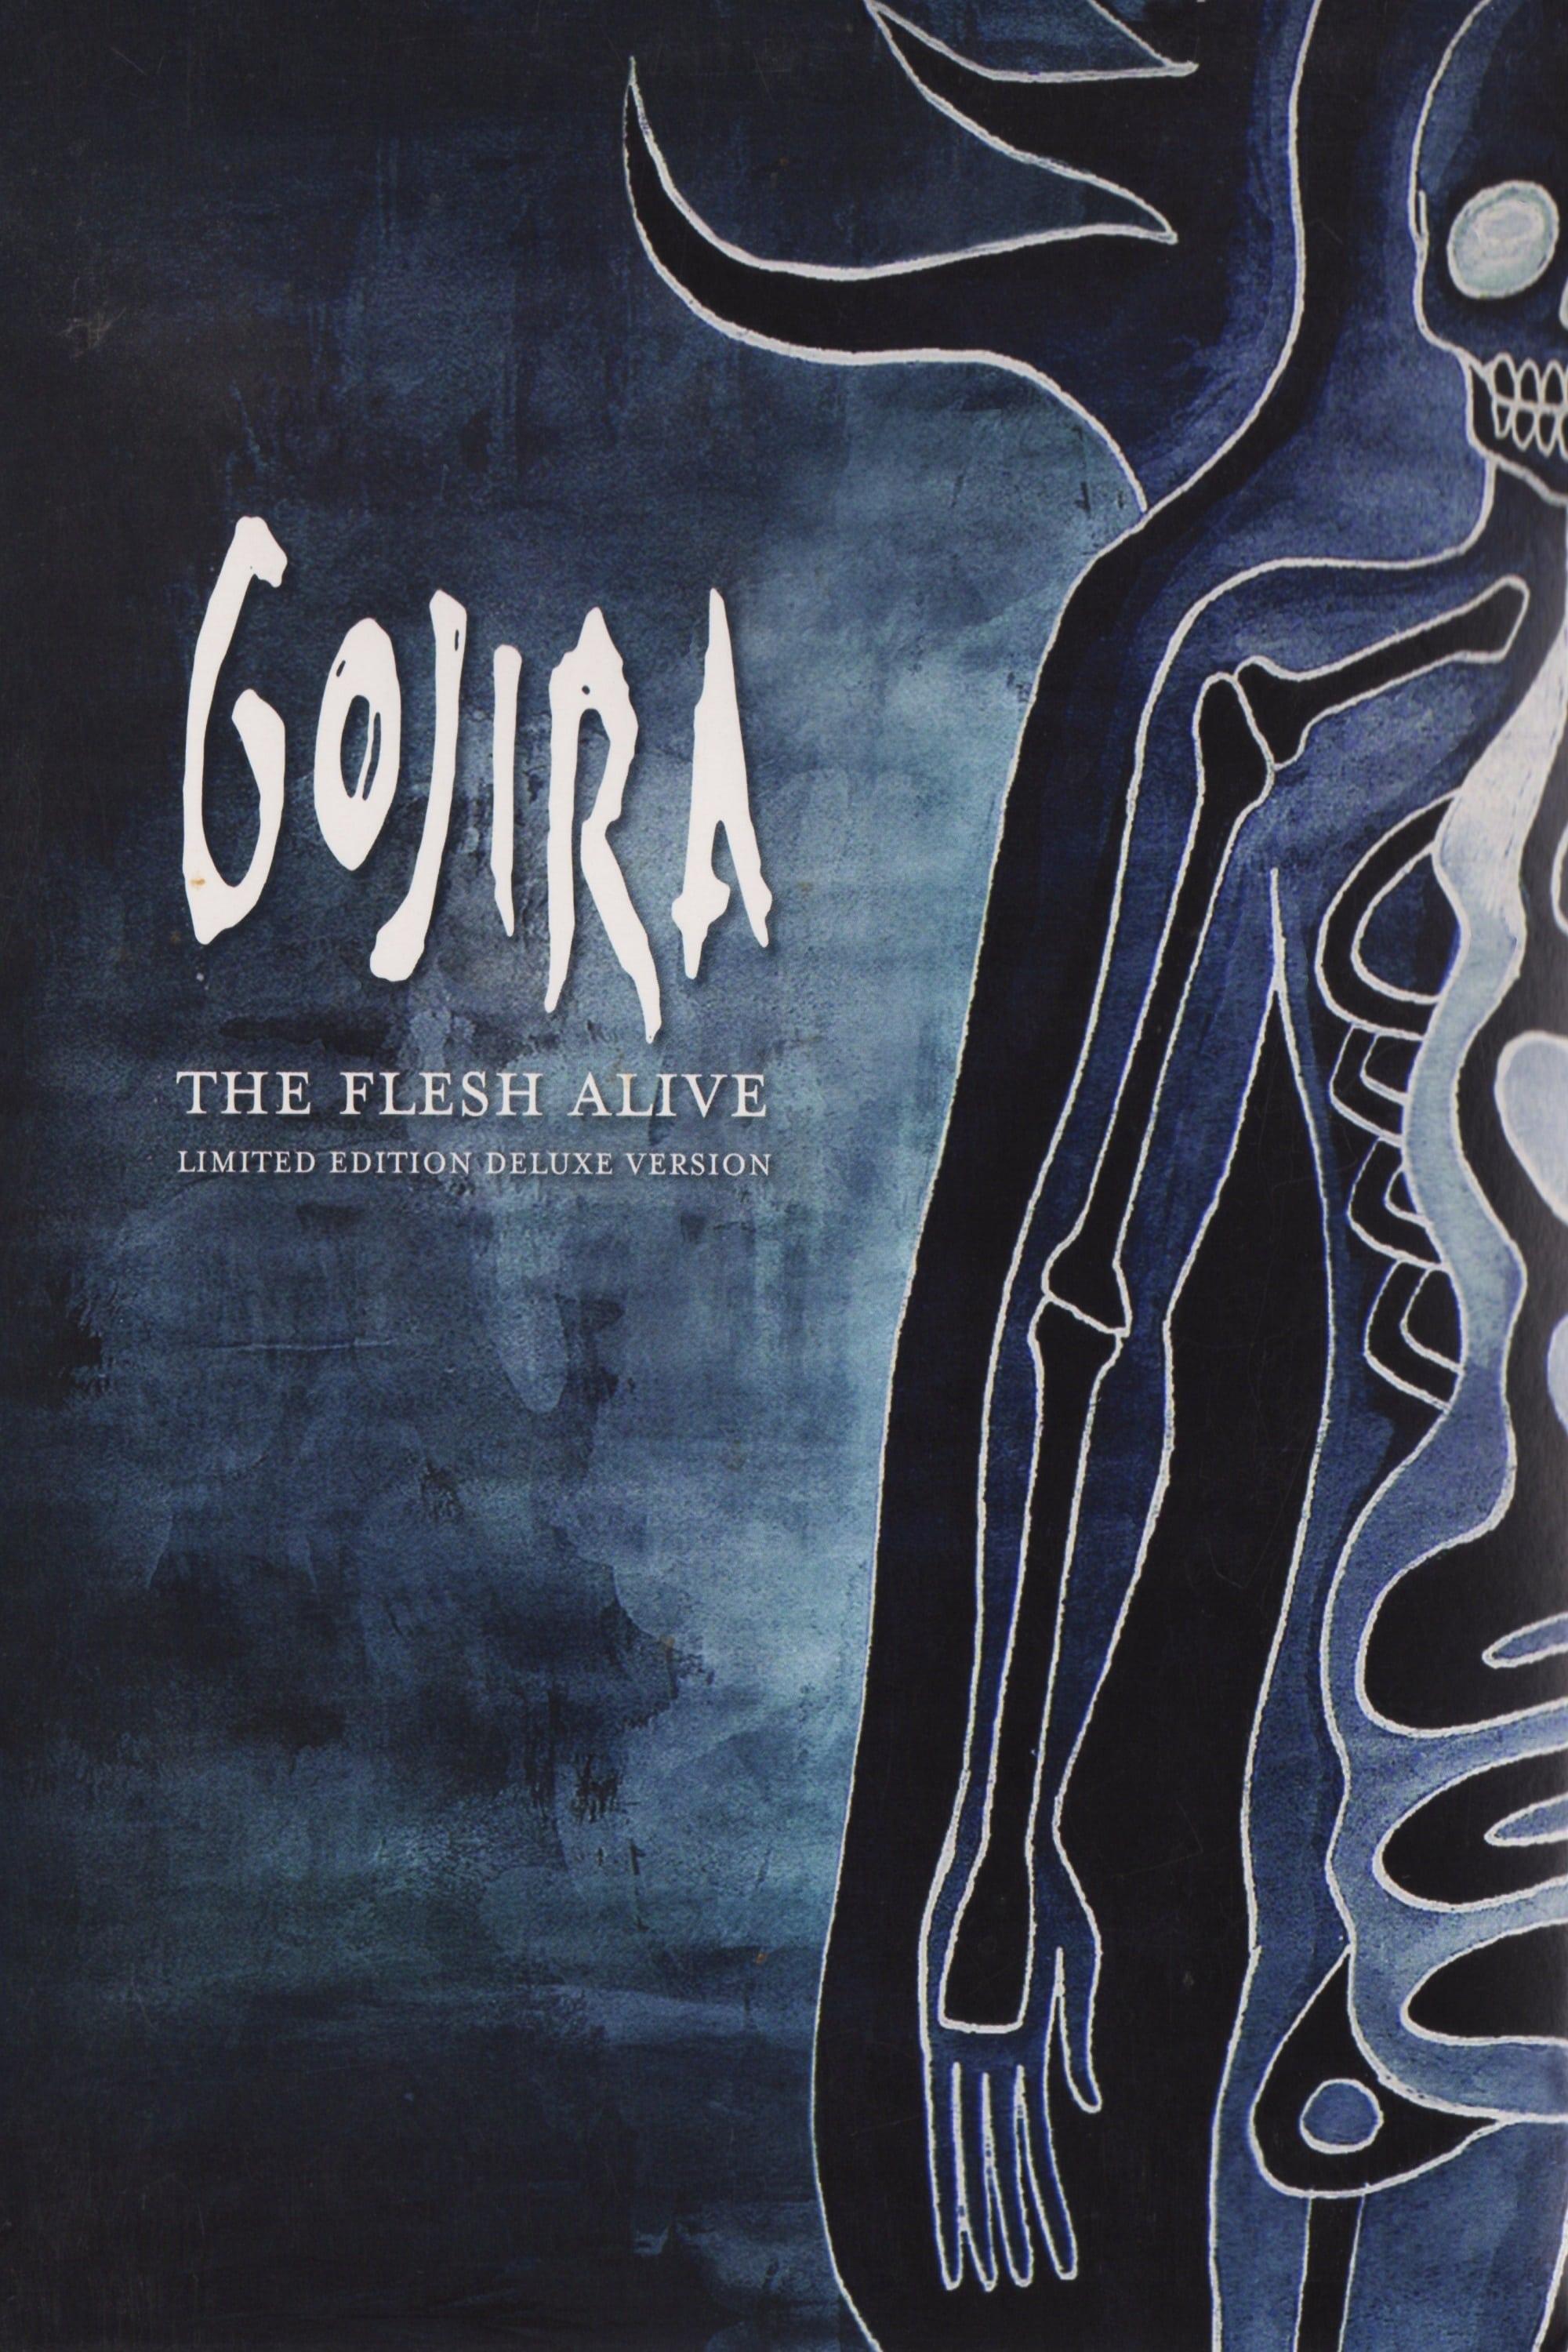 Gojira: The Flesh Alive poster